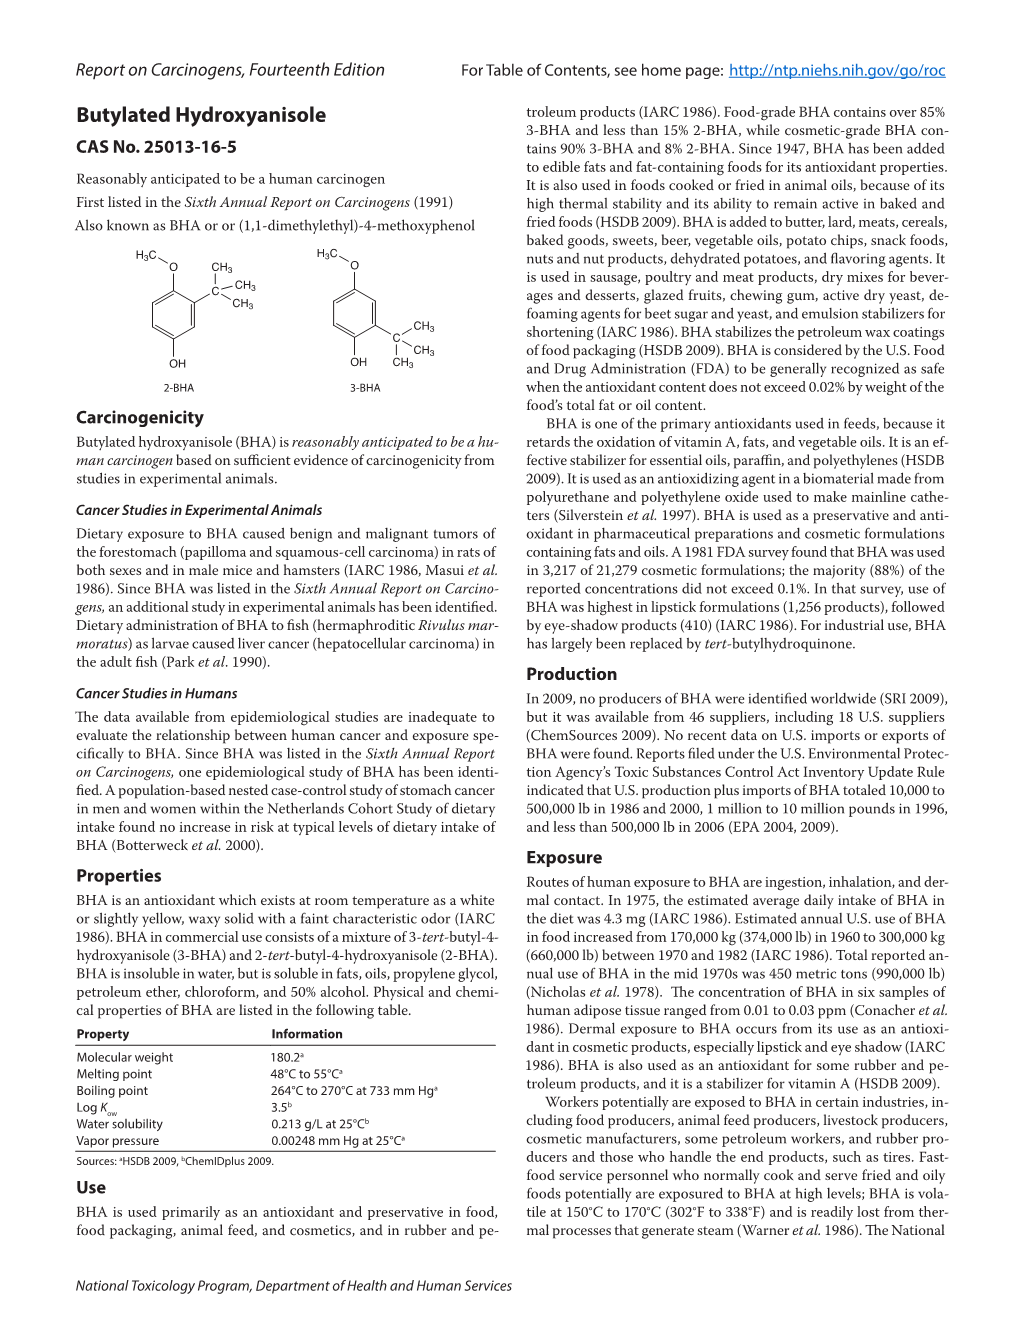 Butylated Hydroxyanisole Troleum Products (IARC 1986)